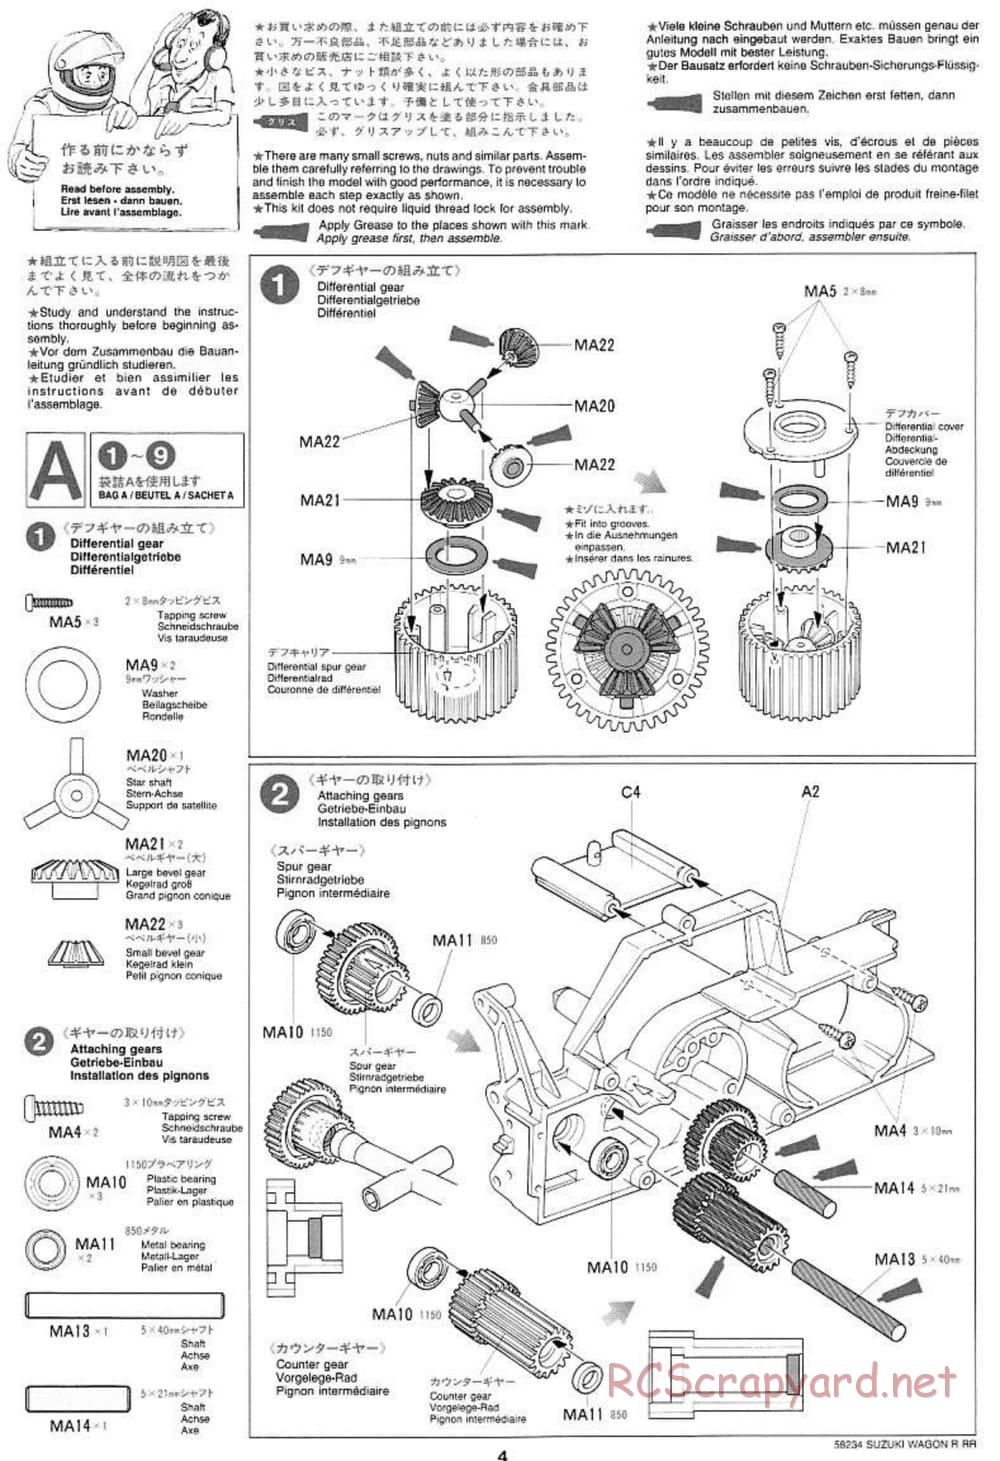 Tamiya - Suzuki WagonR-RR - M03 Chassis - Manual - Page 4